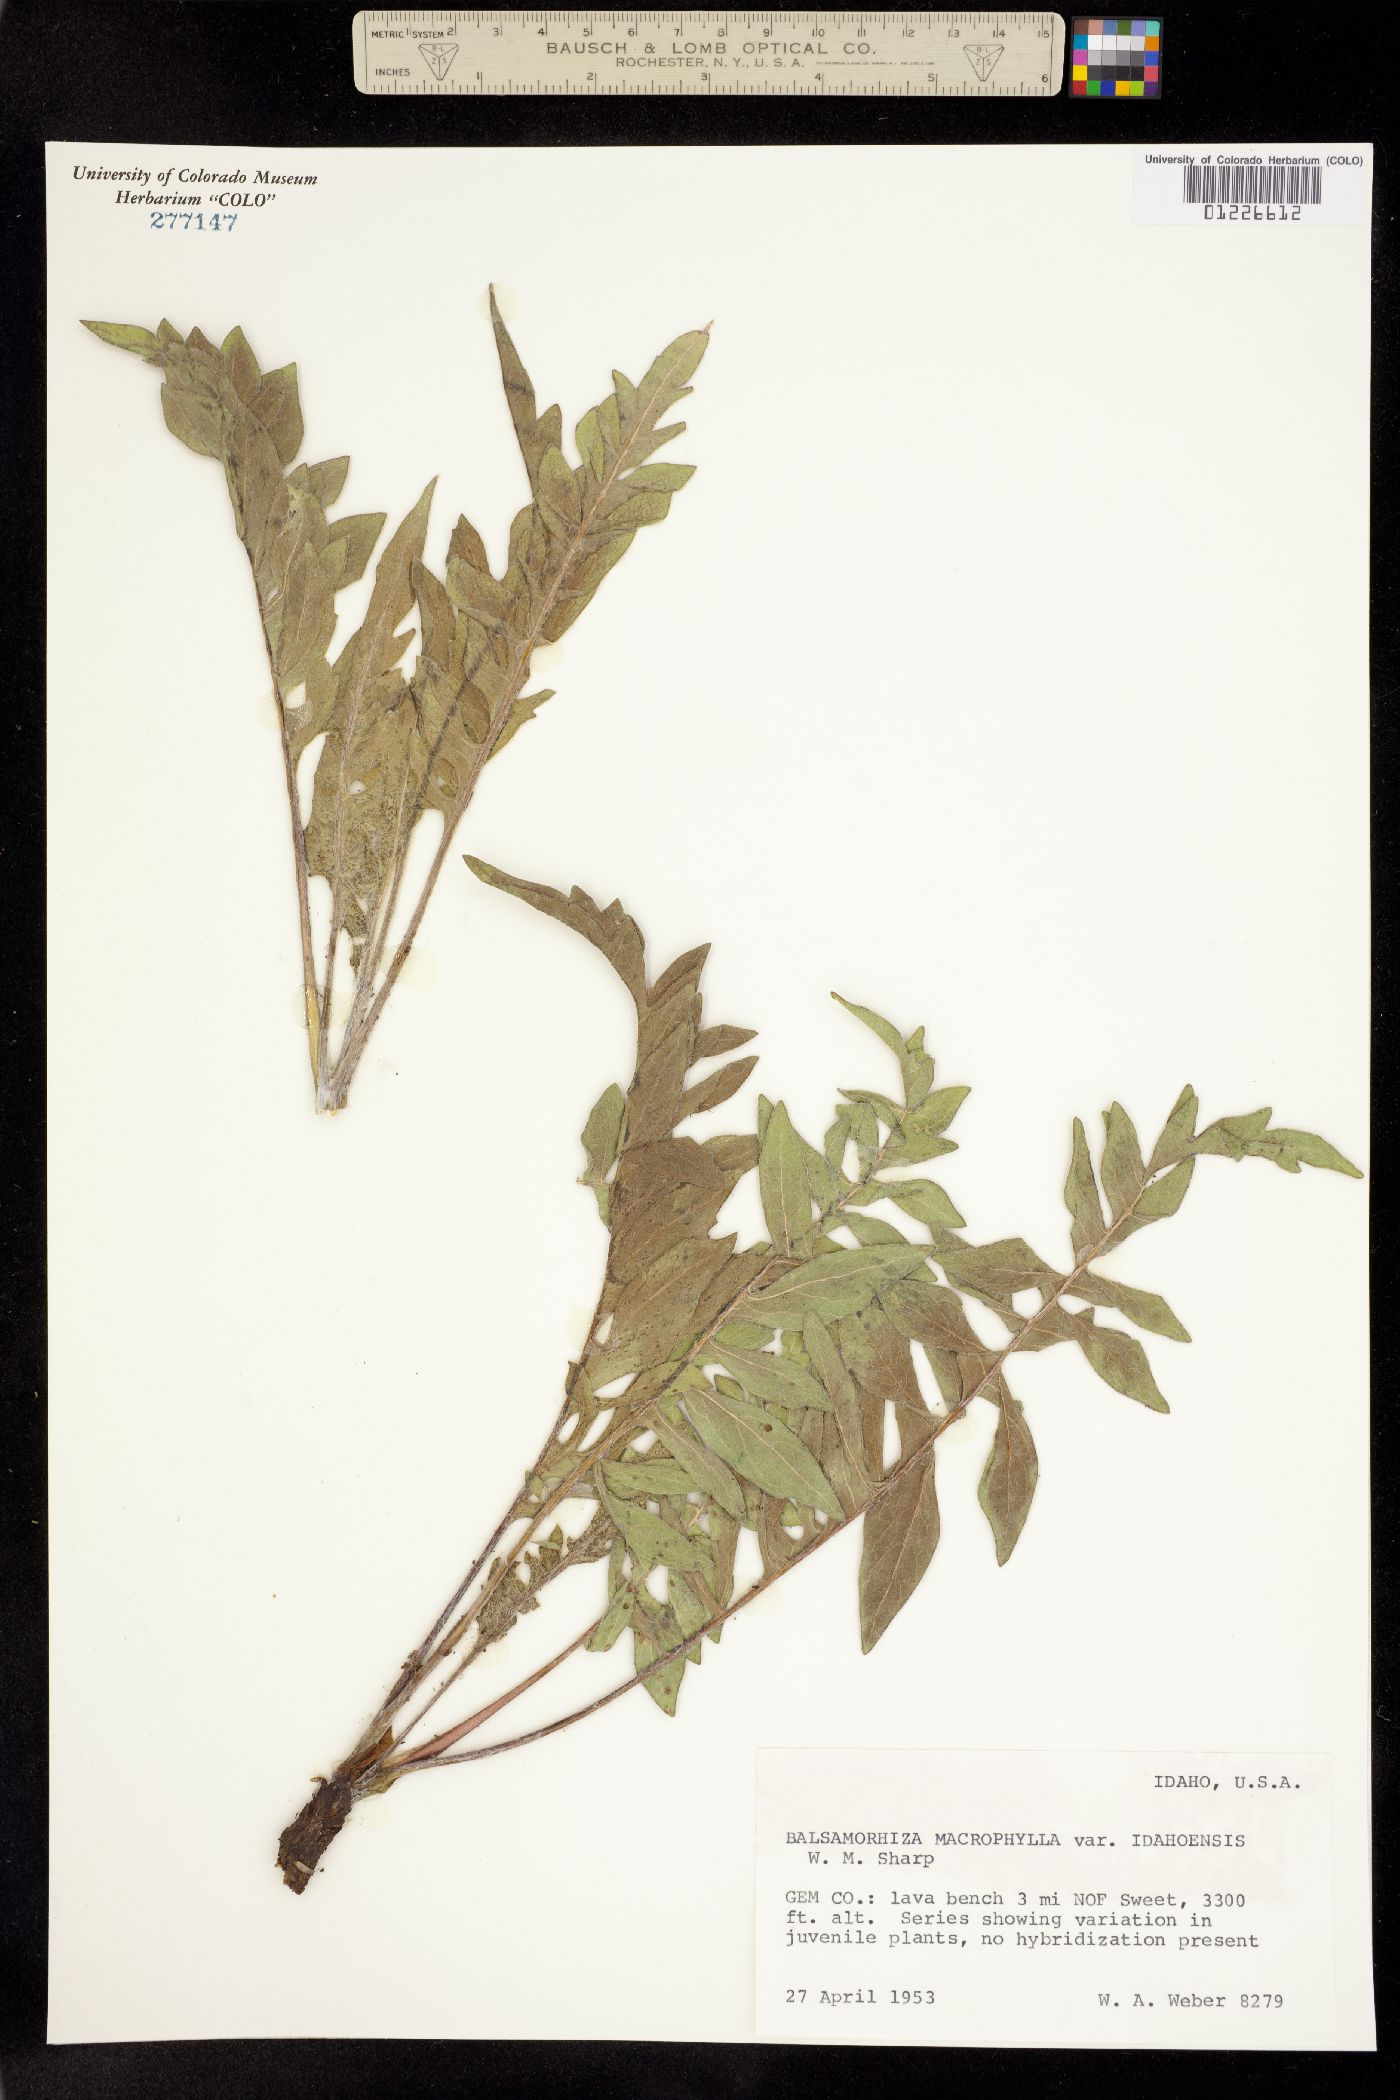 Balsamorhiza macrophylla var. idahoensis image